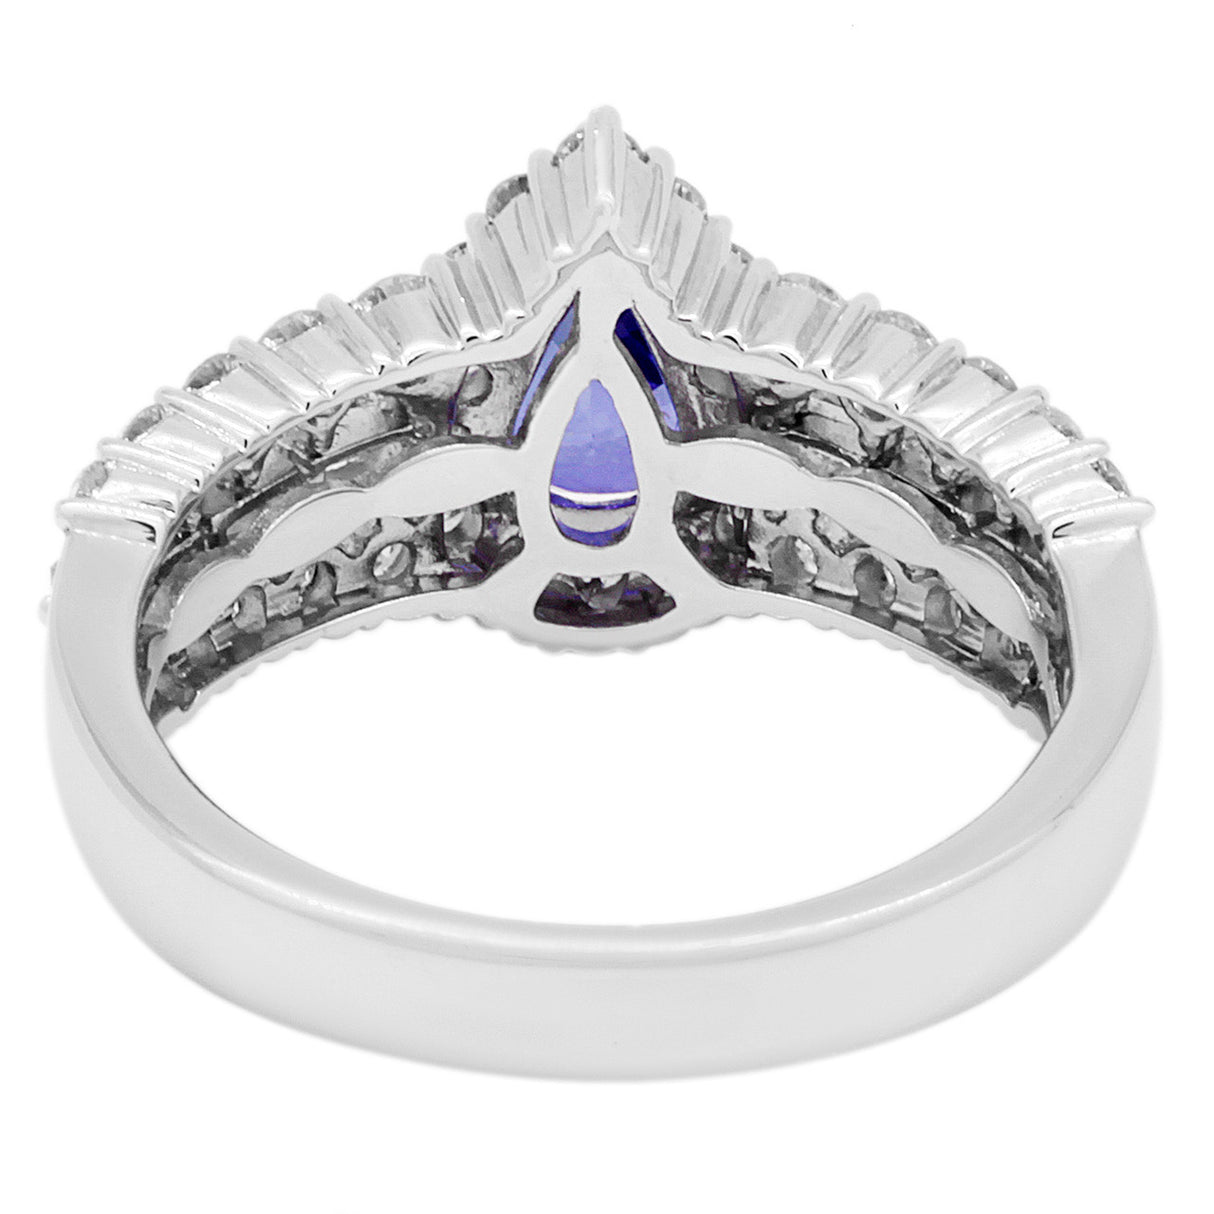 18K White Gold 1.22 Carat Sapphire Diamond Ring